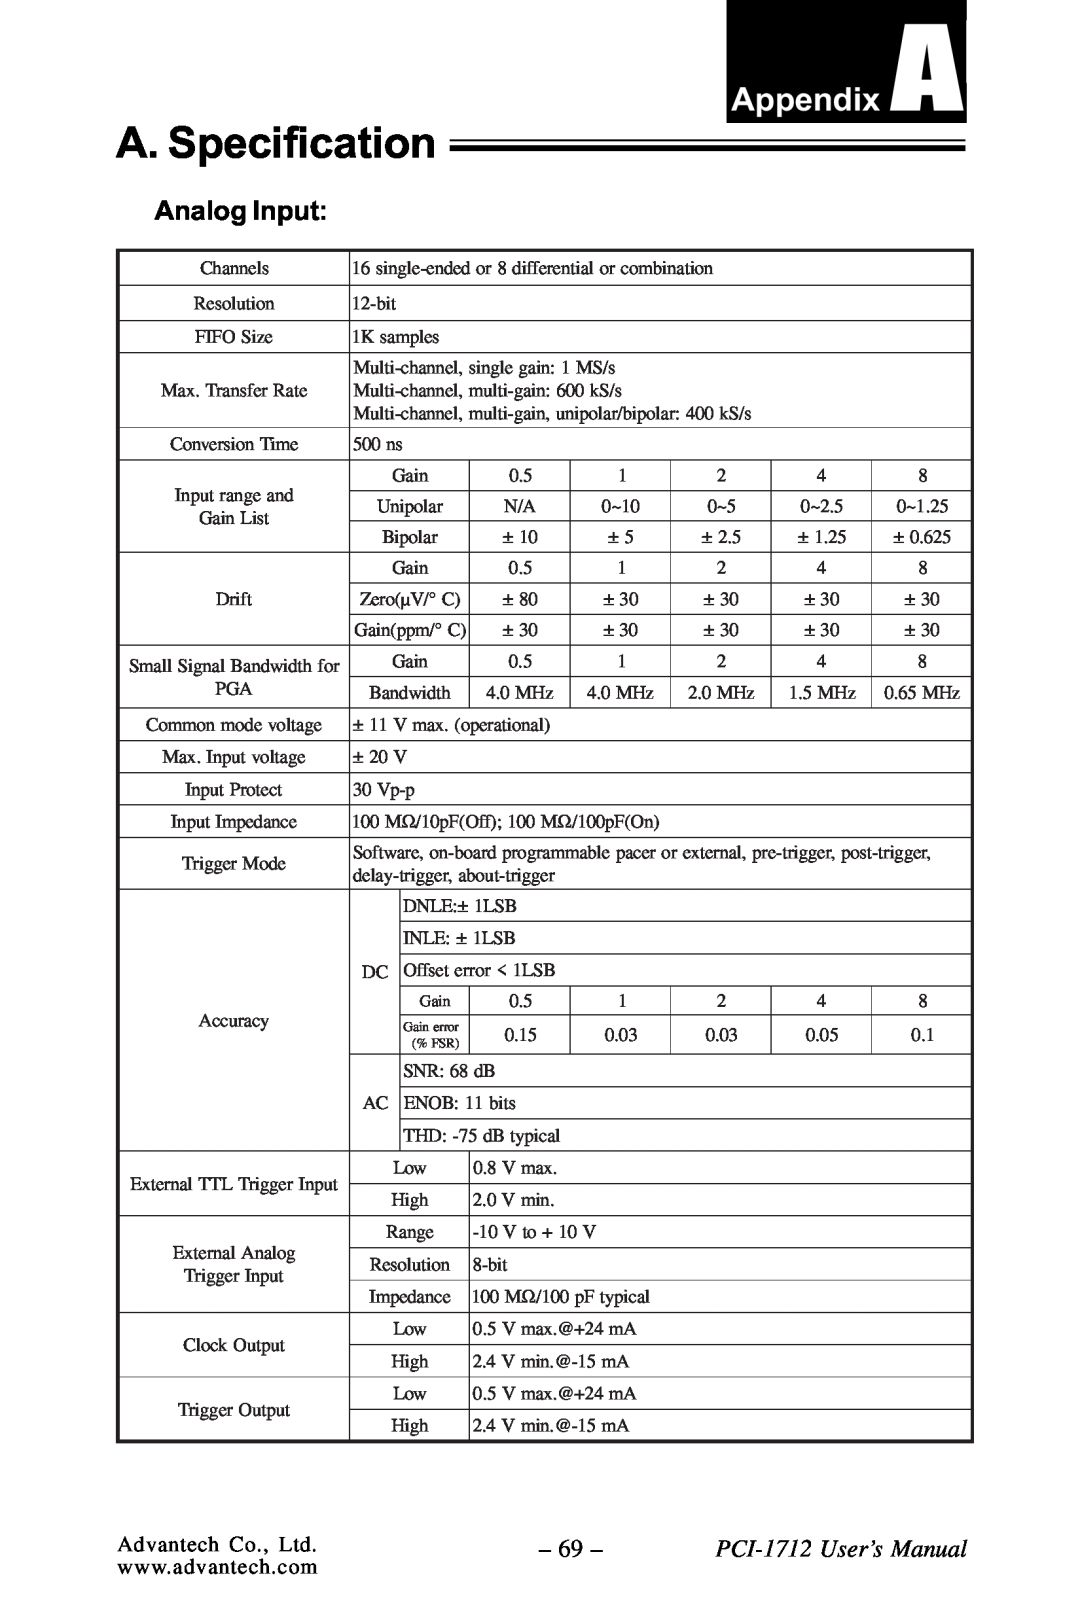 Konica Minolta PCI-1712L user manual A. Specification, Appendix A, PCI-1712 User’s Manual 